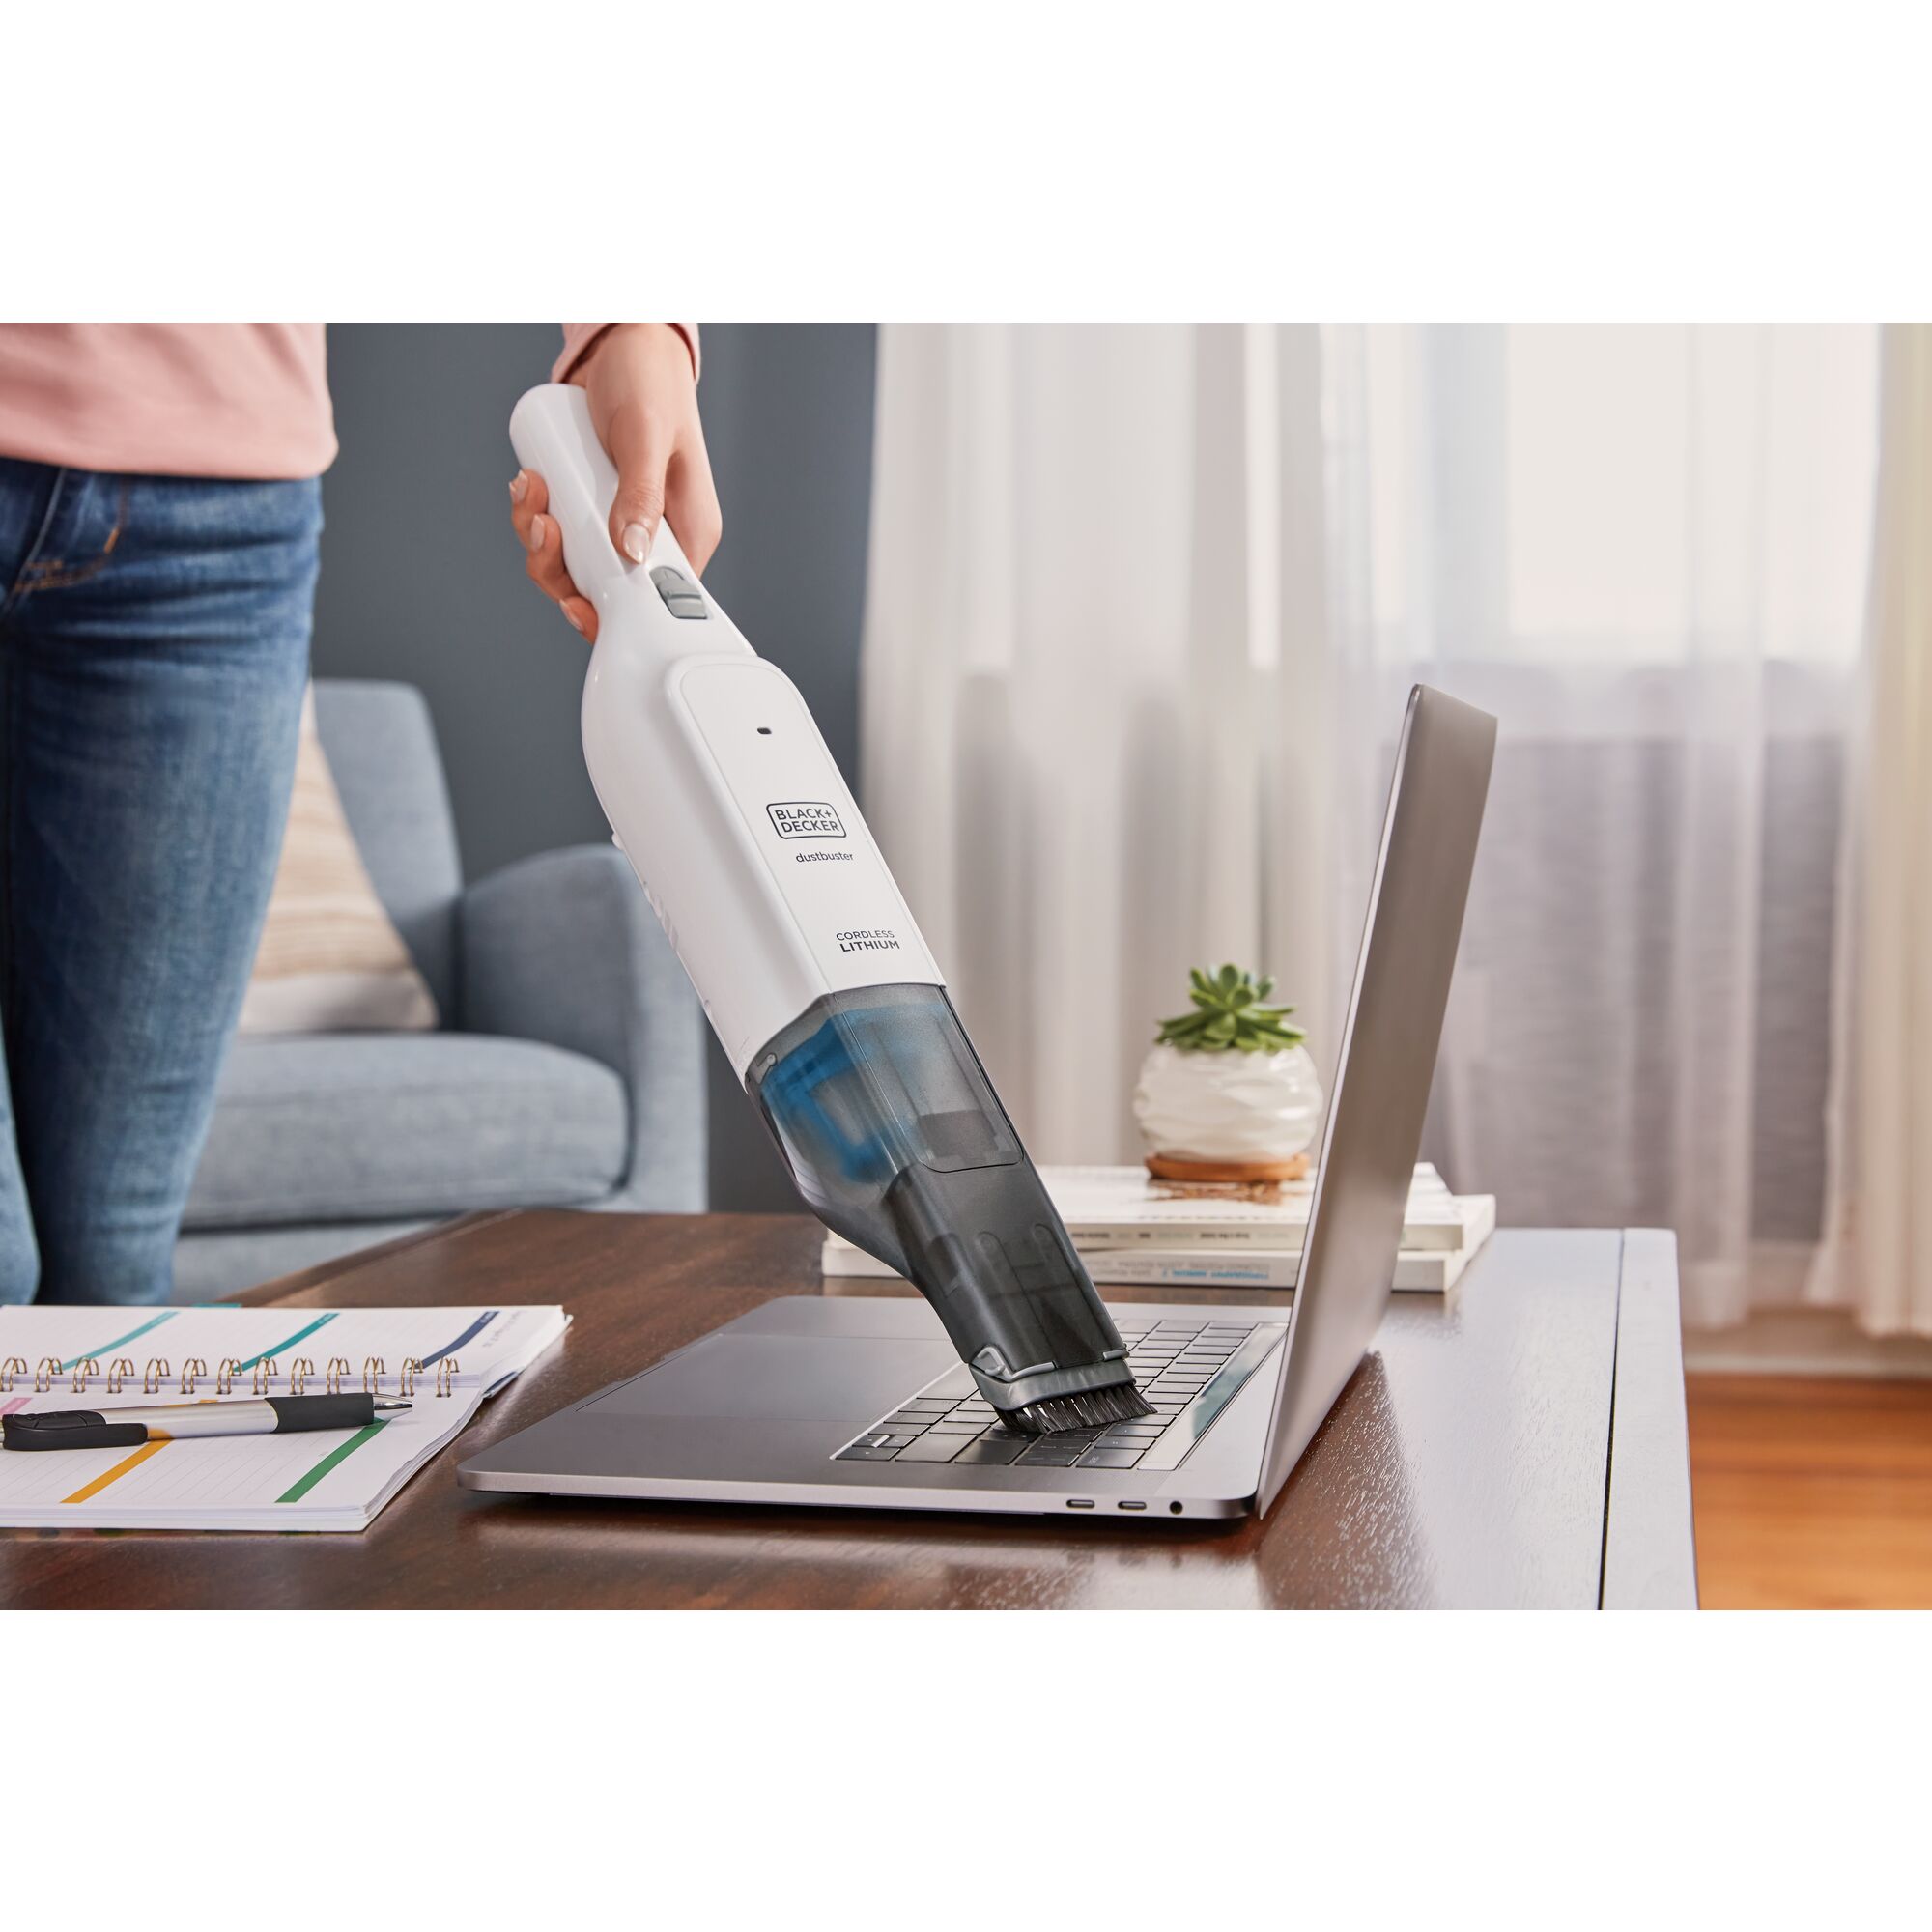 Dustbuster 12 volt max advanced clean cordless hand vacuum cleaning laptop.